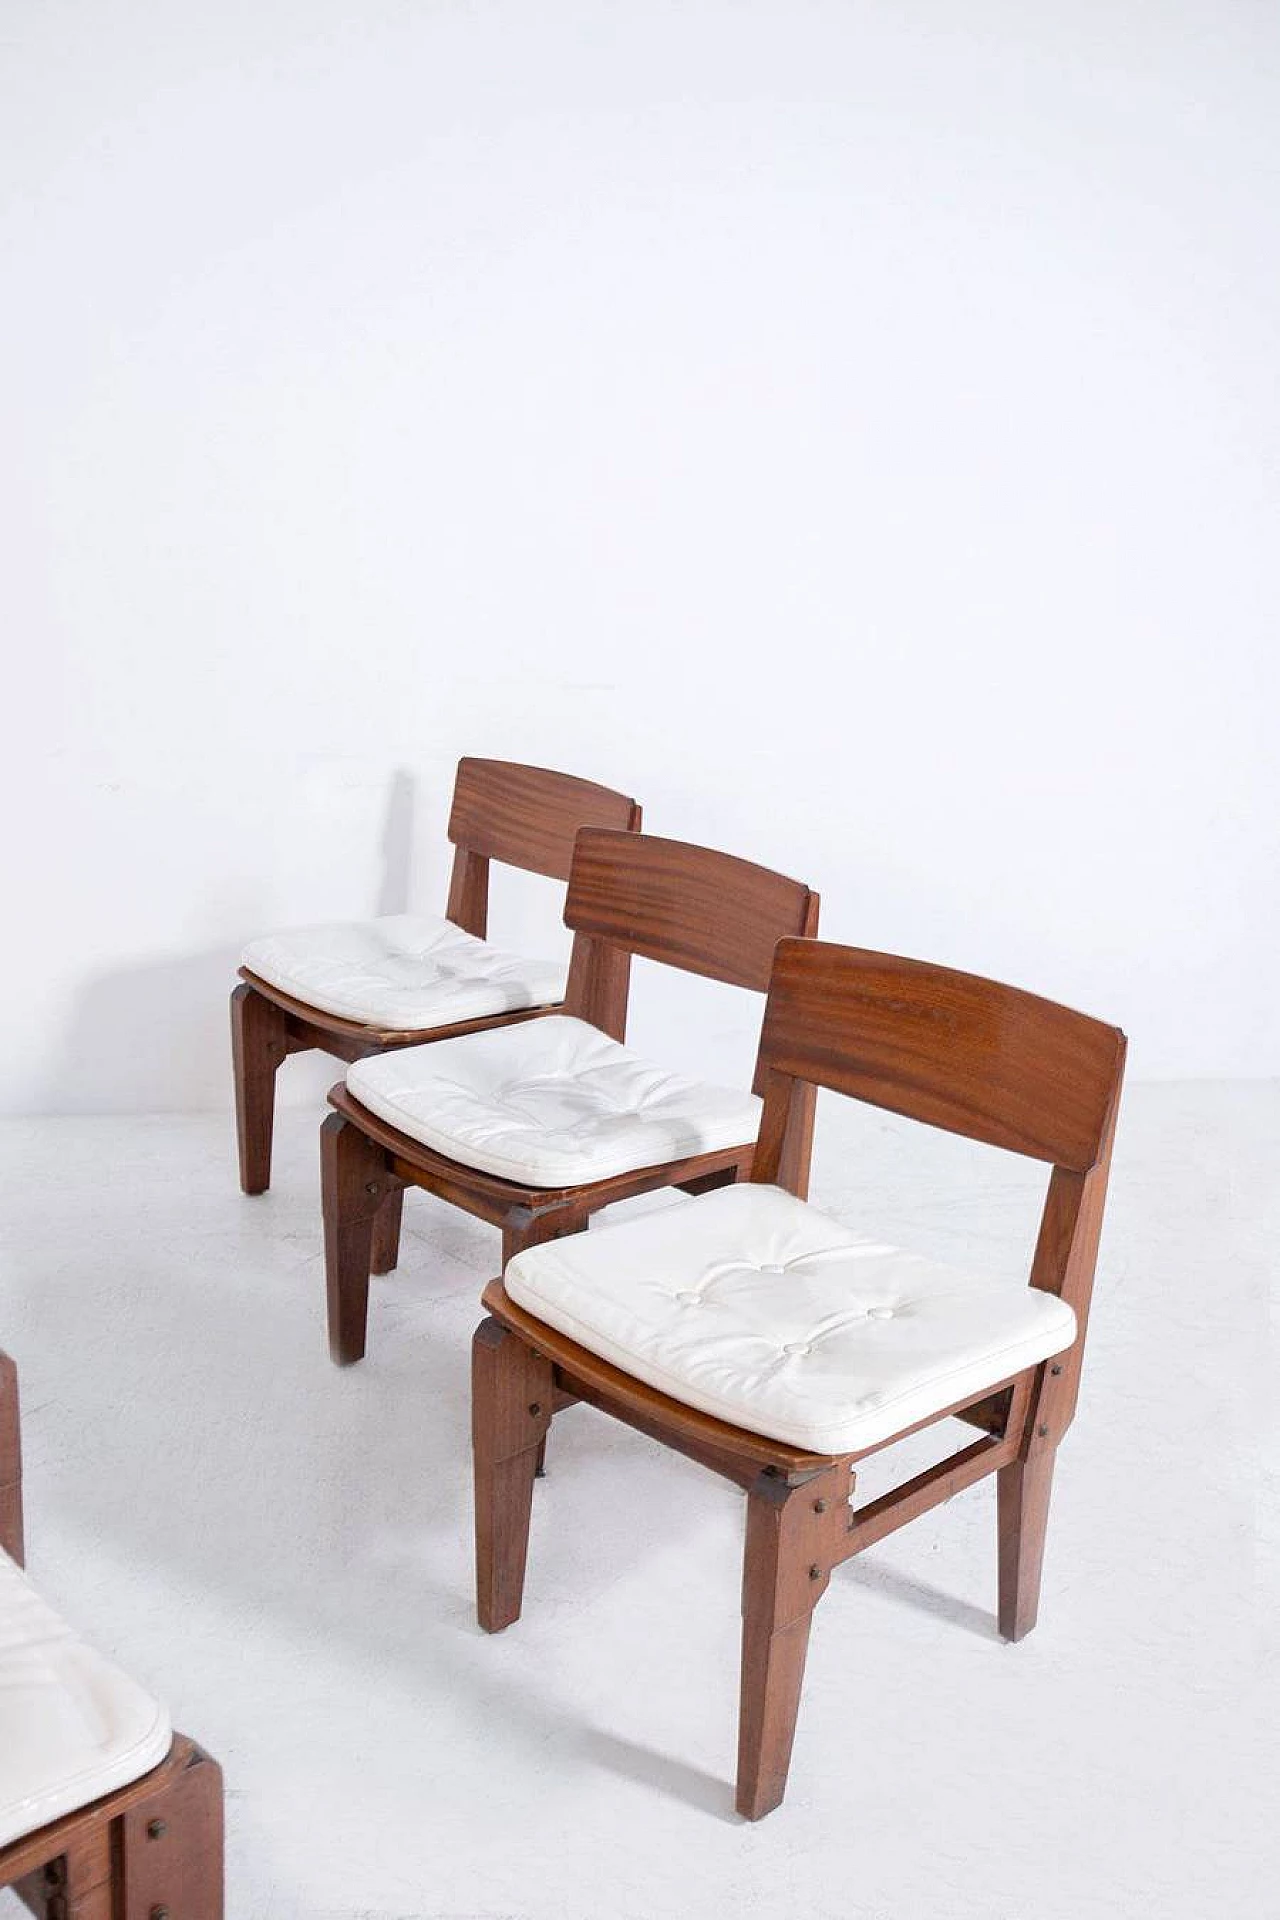 6 Chairs in mahogany and fabric by Vito Sangiradi for Pallante store Bari, 50s 1312286